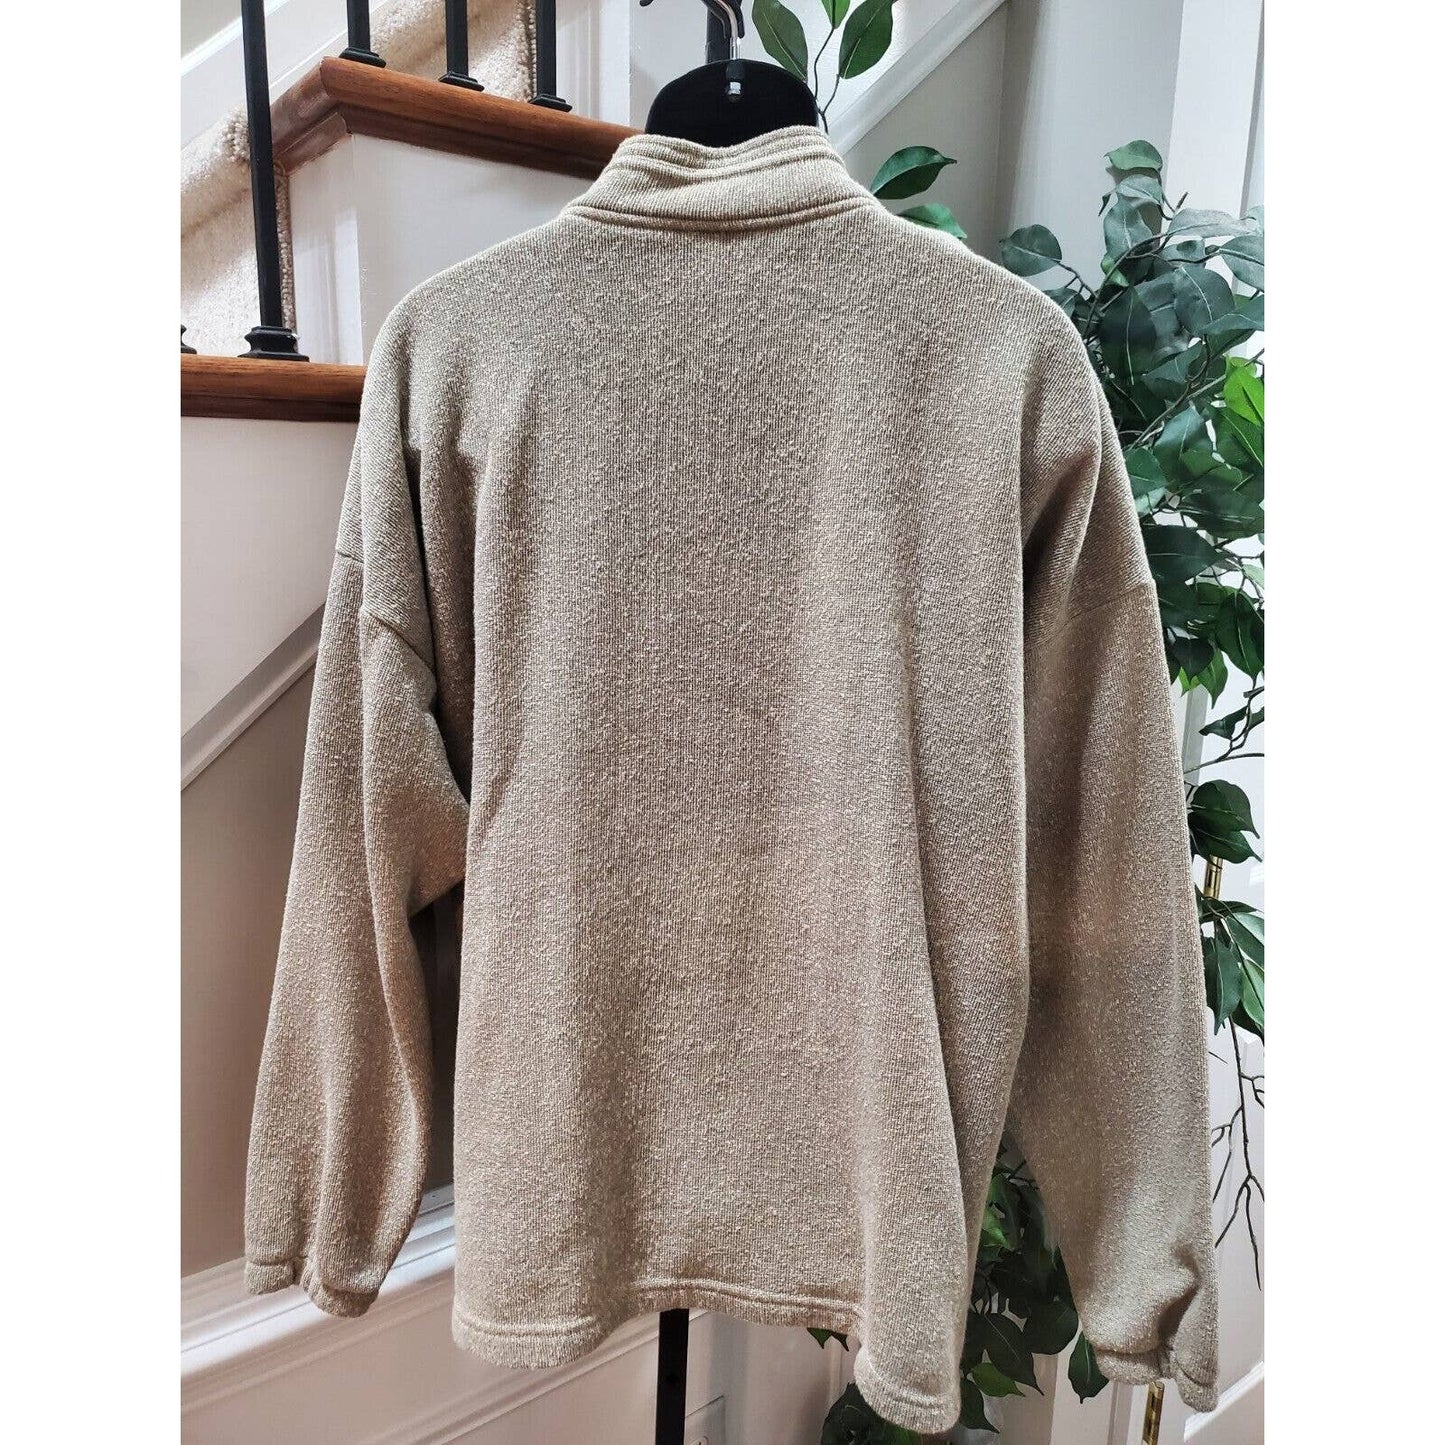 Northern Souvenirs Men's Brown 100% Cotton High Neck Half Zip Sweater 2XL